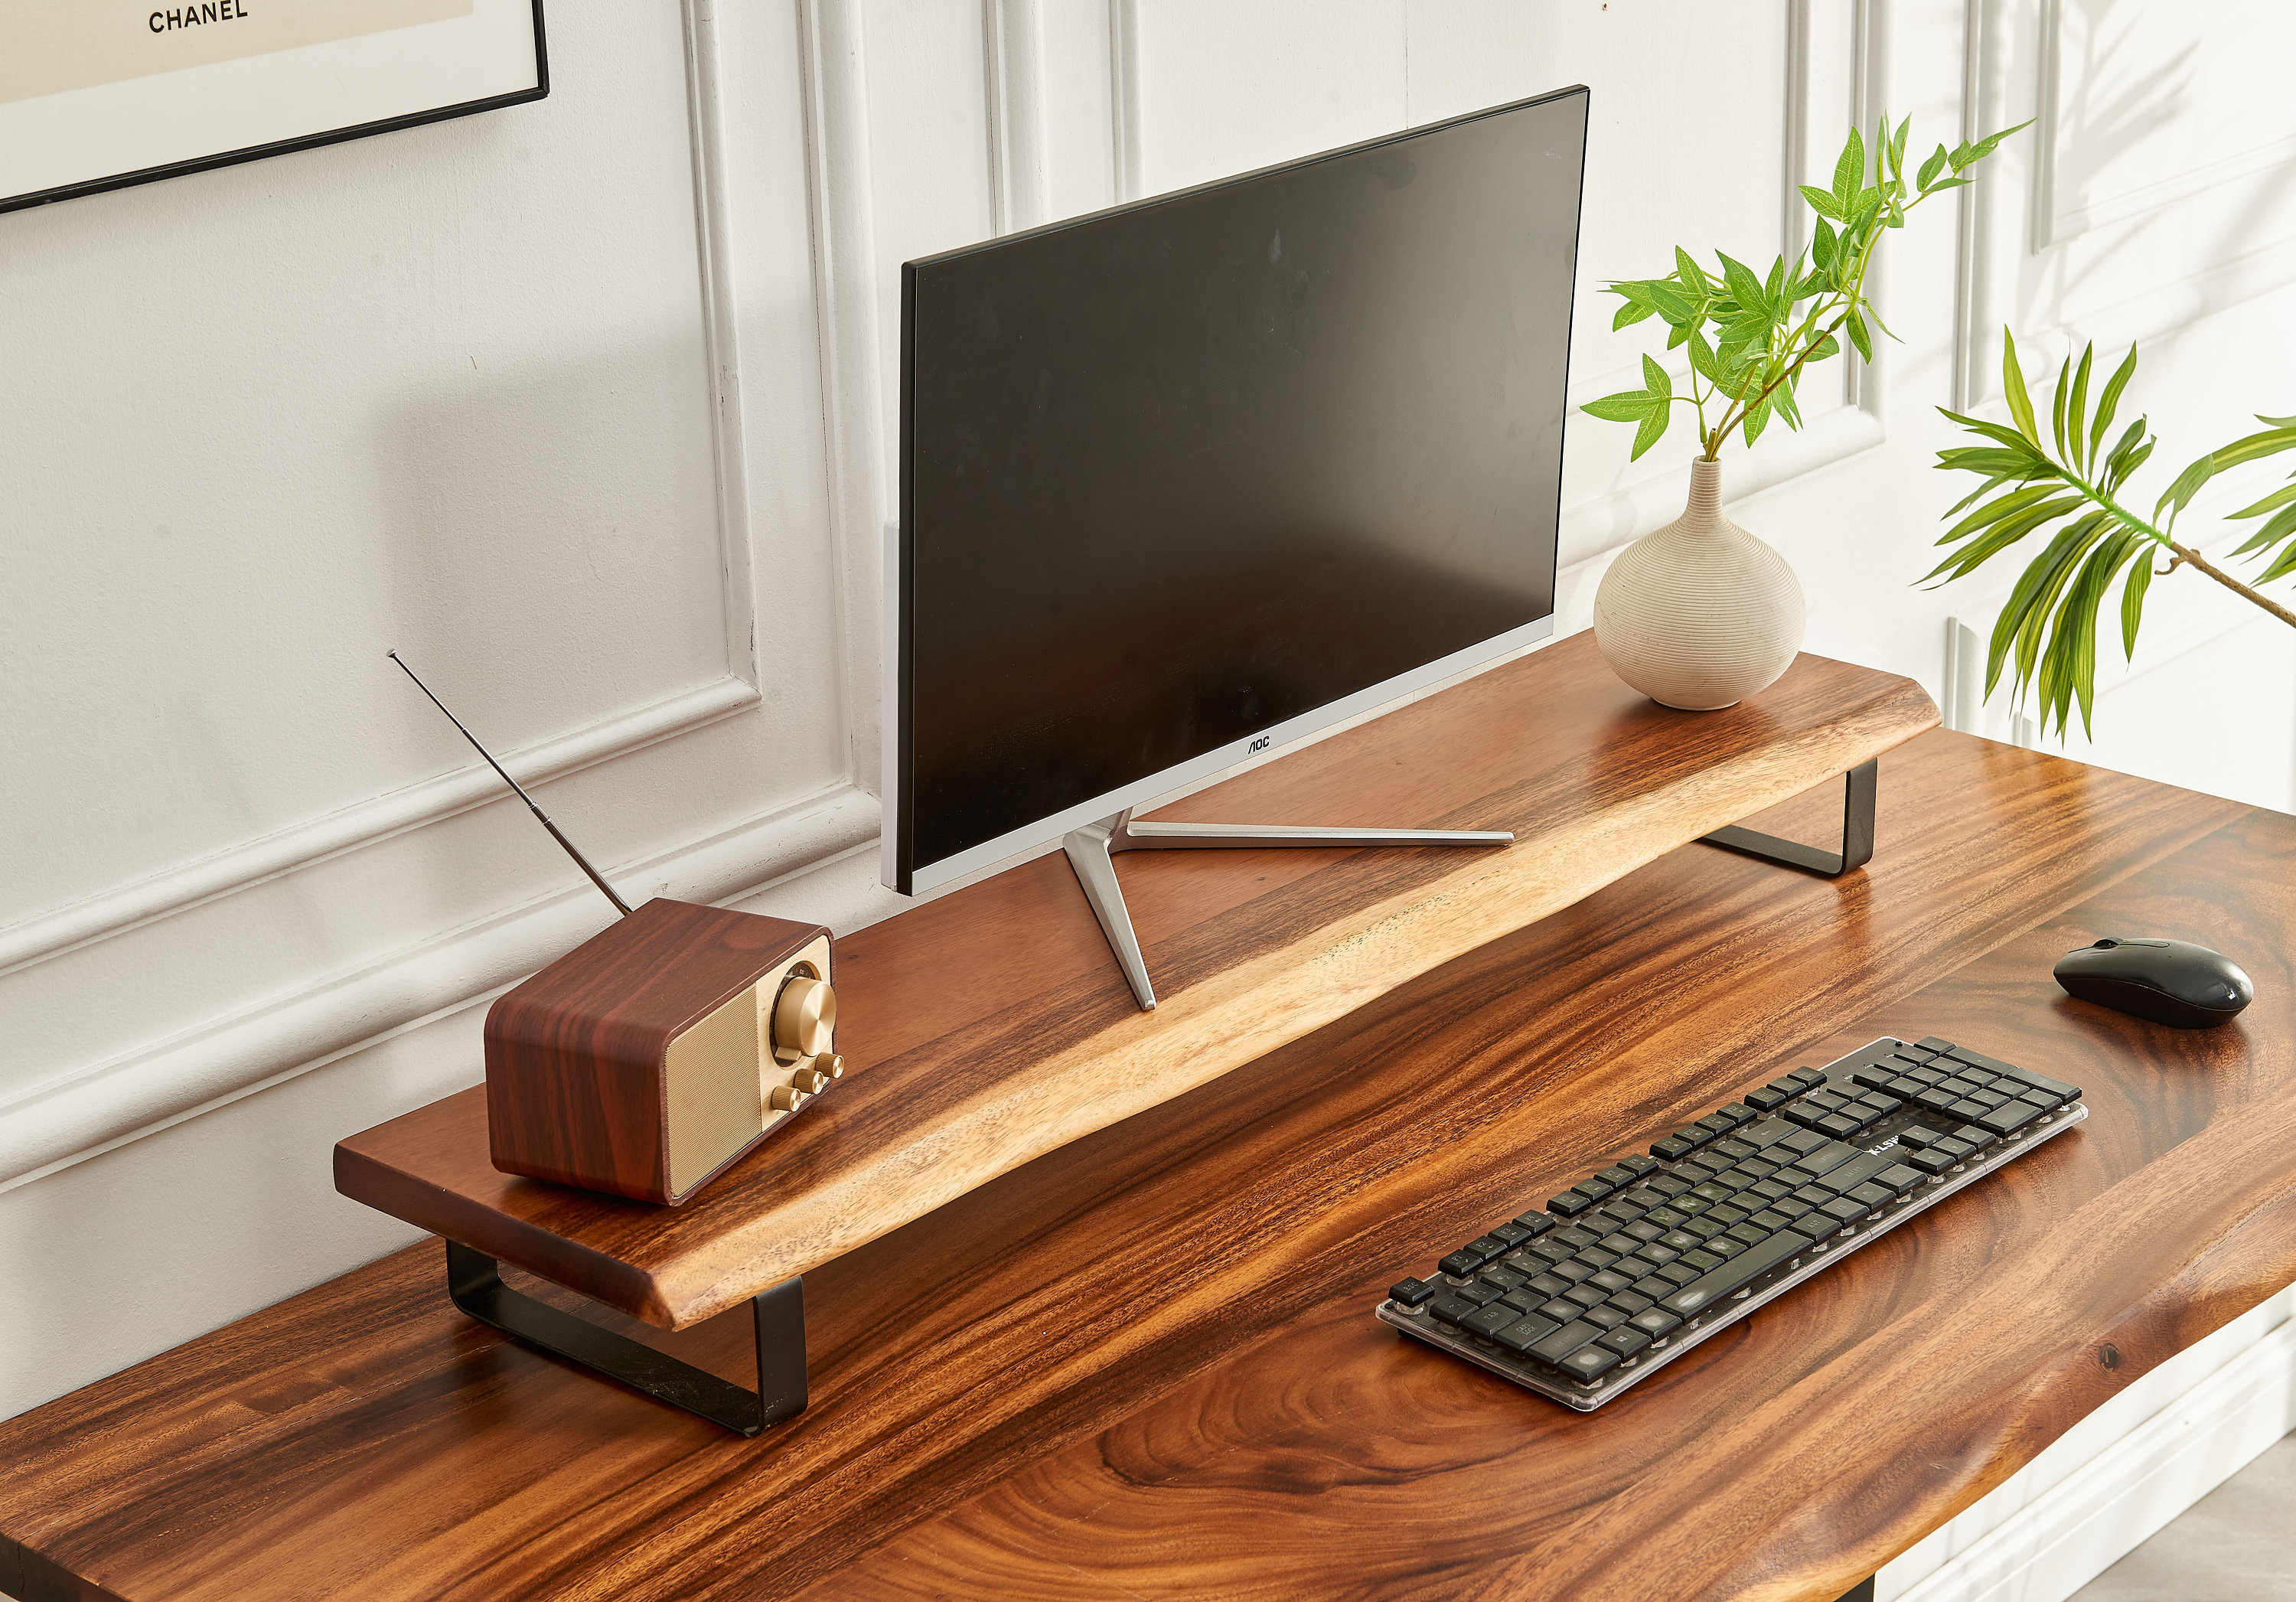 Desk Shelf or Monitor Stand by UPLIFT Desk